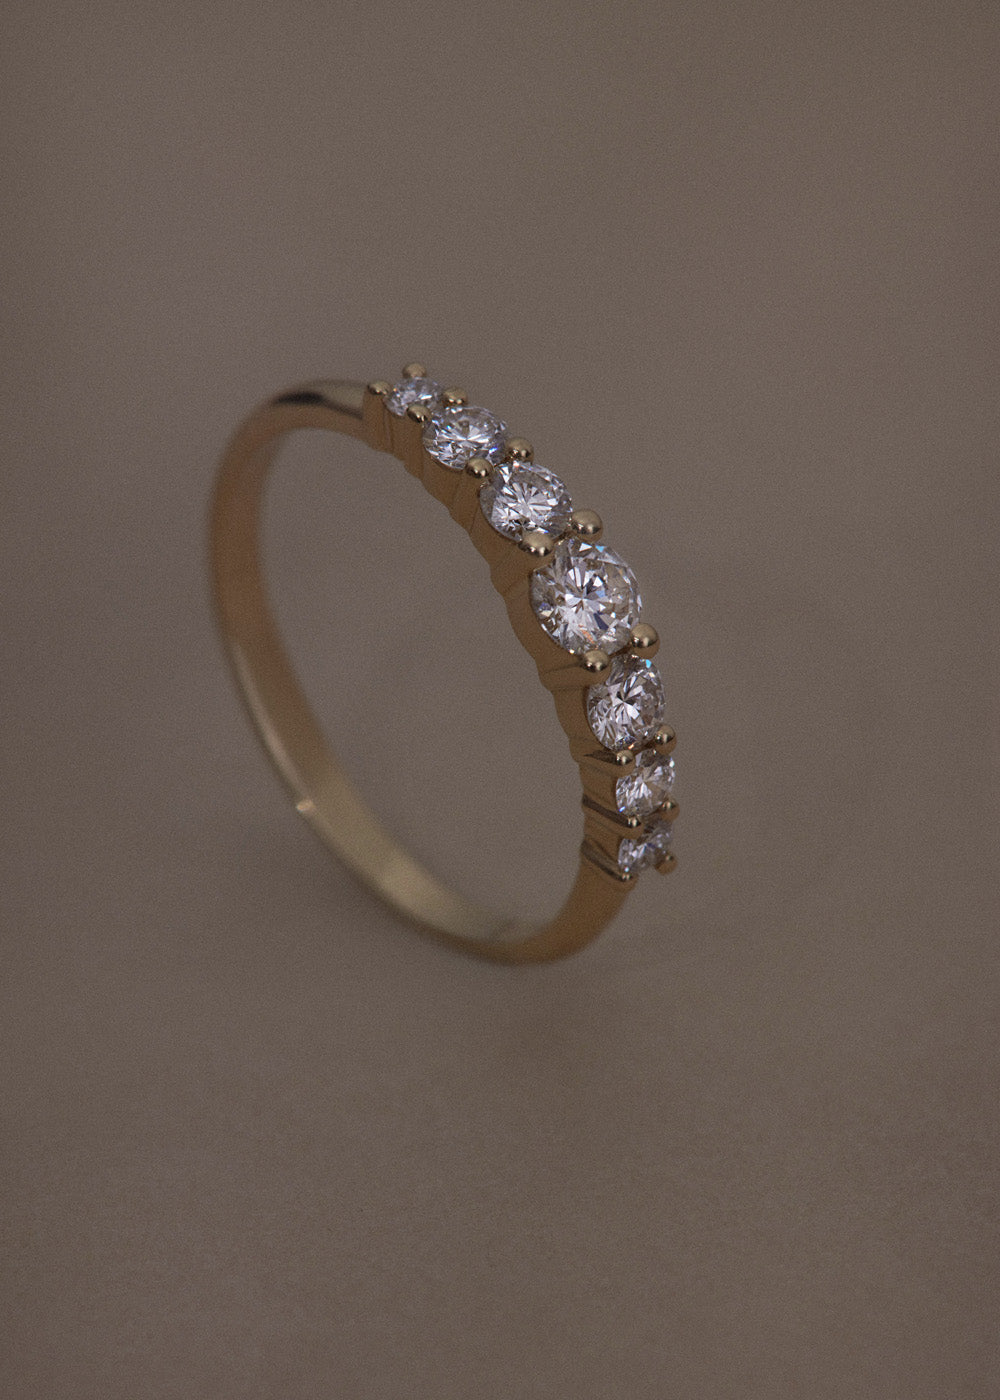 alt="Calla Round Brilliant Diamond Ring"